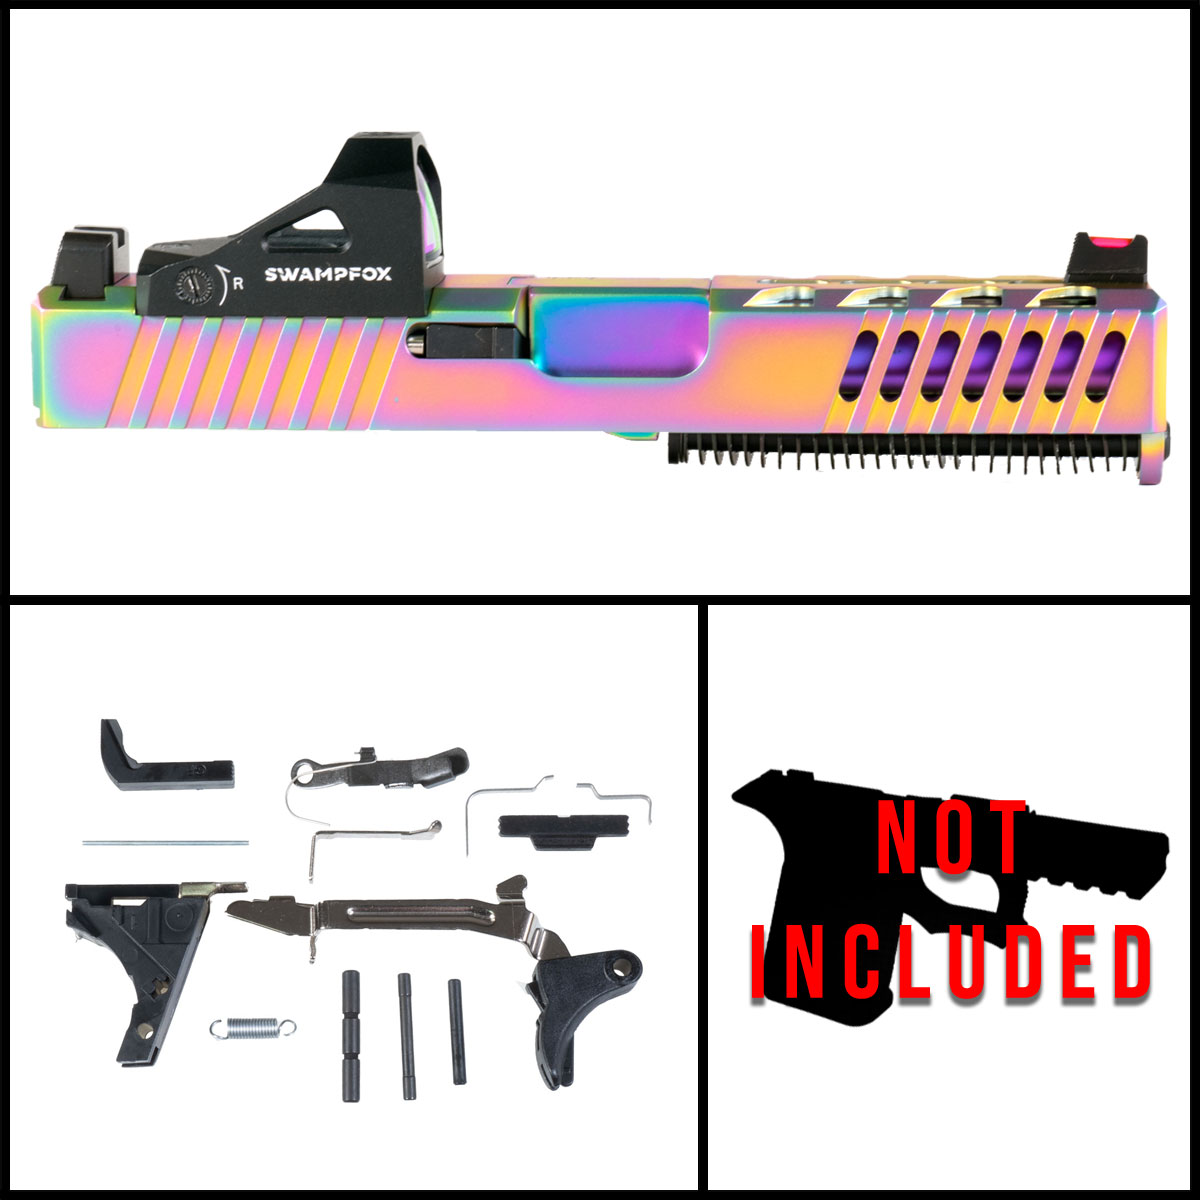 DD 'SkyShade w/ Swampfox Justice RMR' 9mm Full Pistol Build Kits (Everything Minus Frame) - Glock 19 Gen 1-2 Compatible